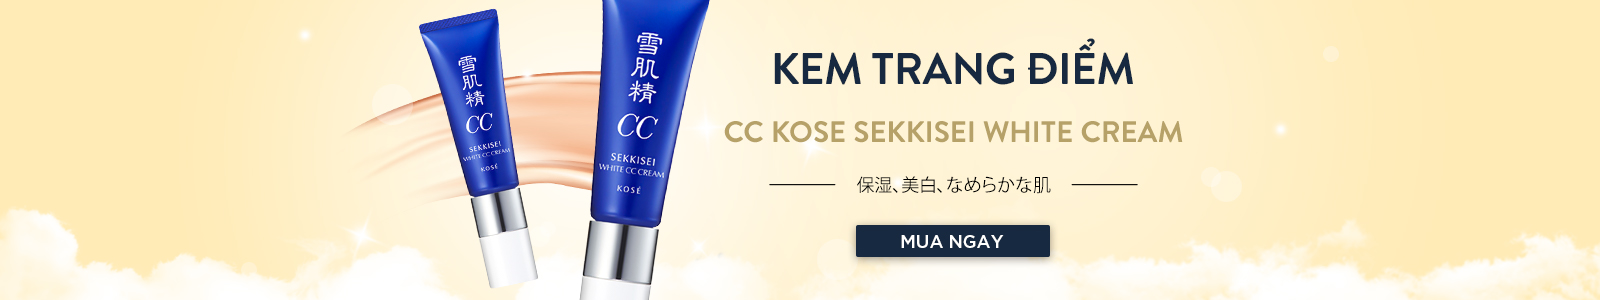 Kem trang điểm CC Kose Sekkisei White Cream